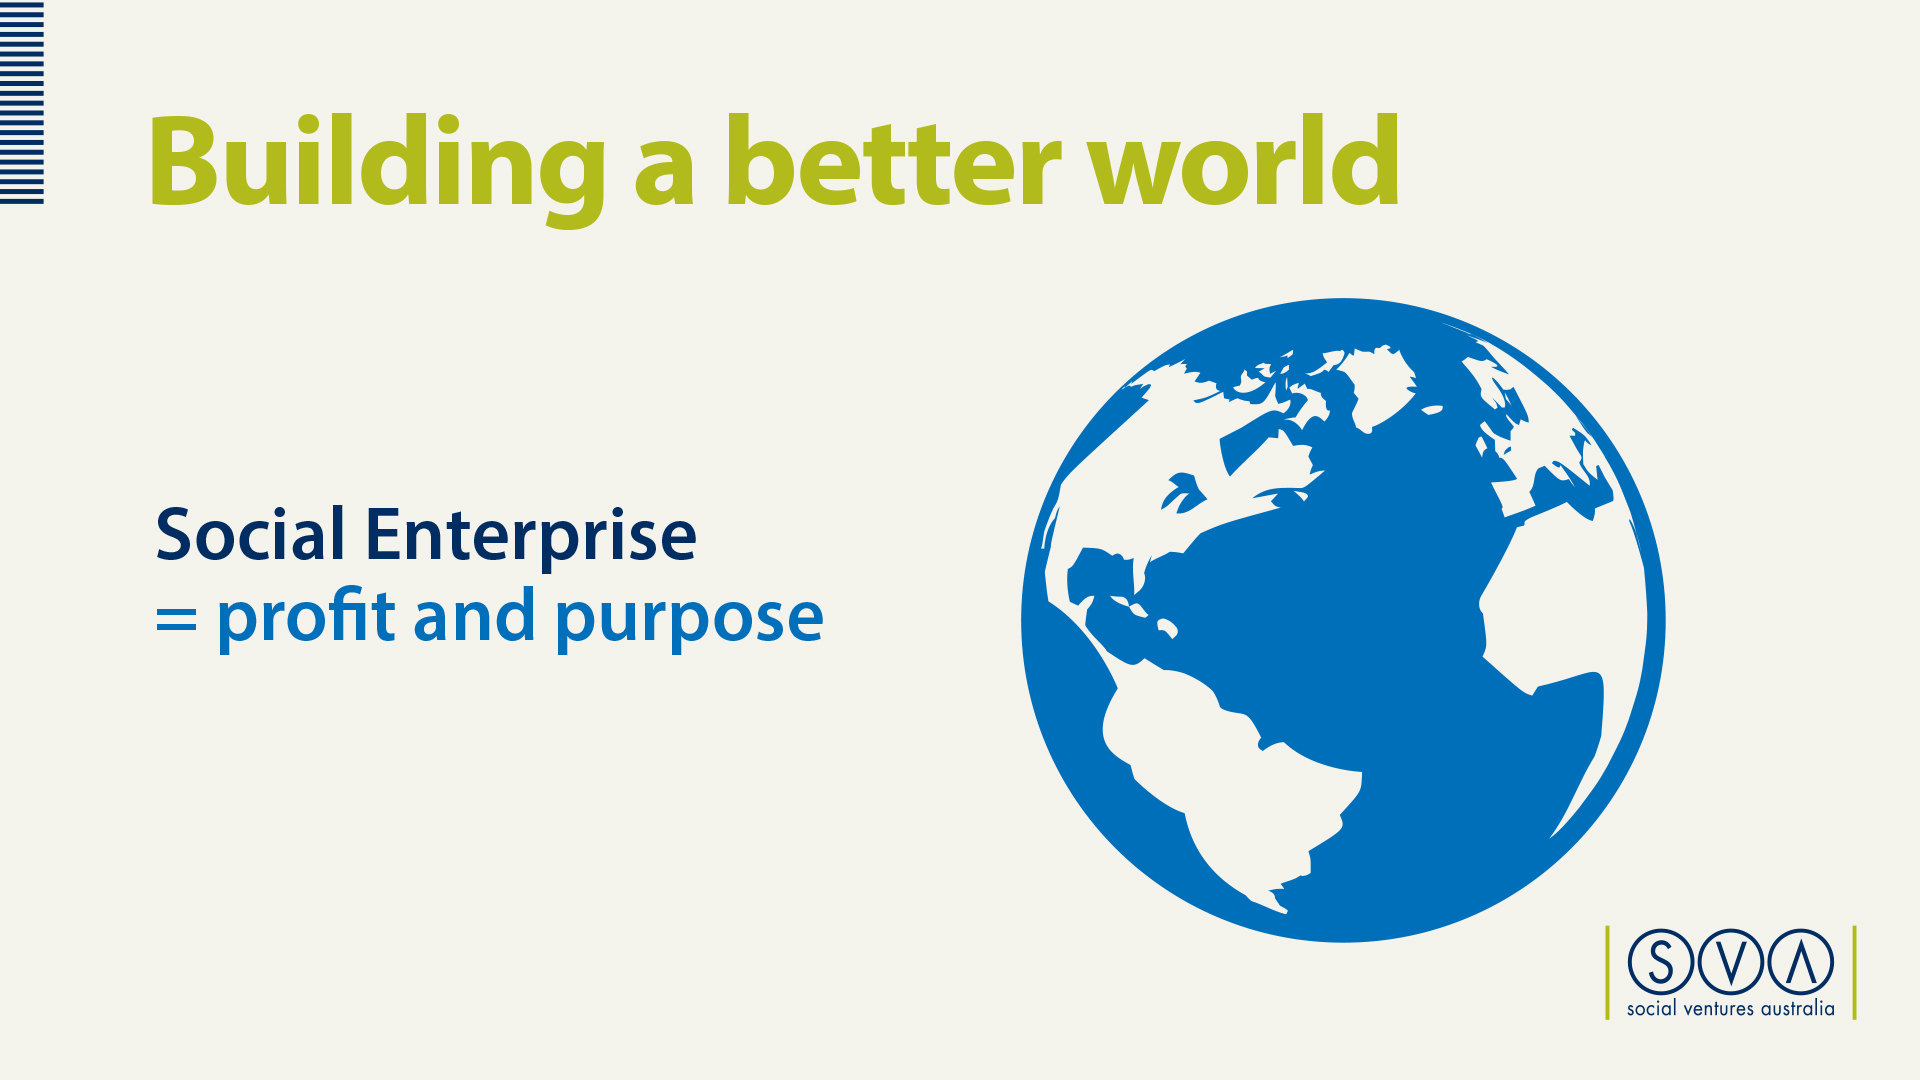 Building better worlds. Social Enterprise. Better World. Picture of social Enterprise. Enterprise profit.